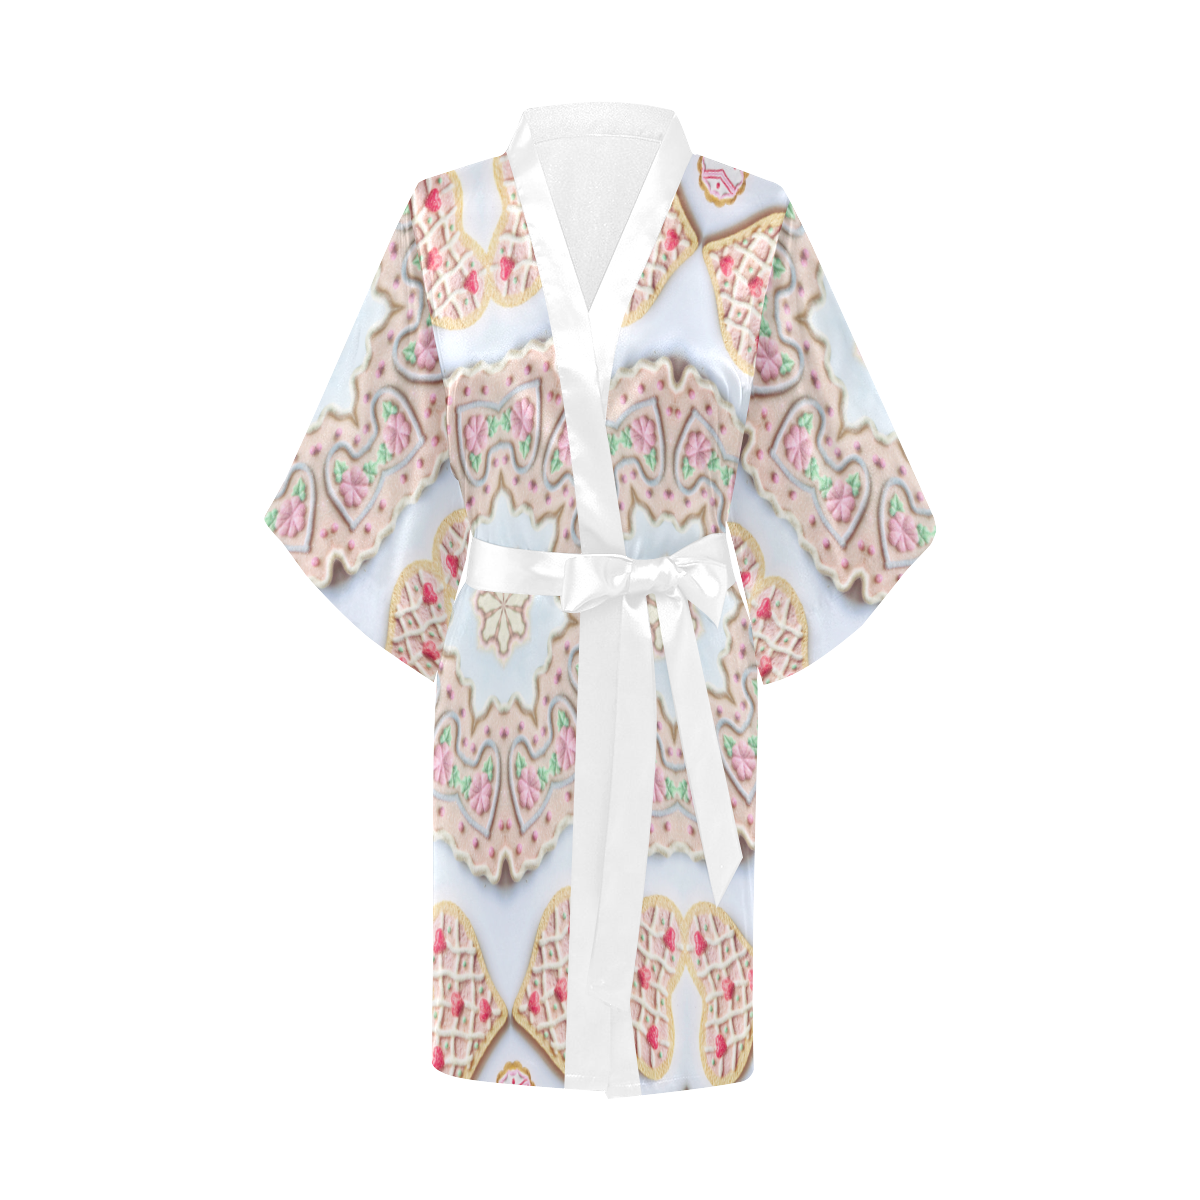 Love and Romance Heart Shaped Sugar Cookies Kimono Robe